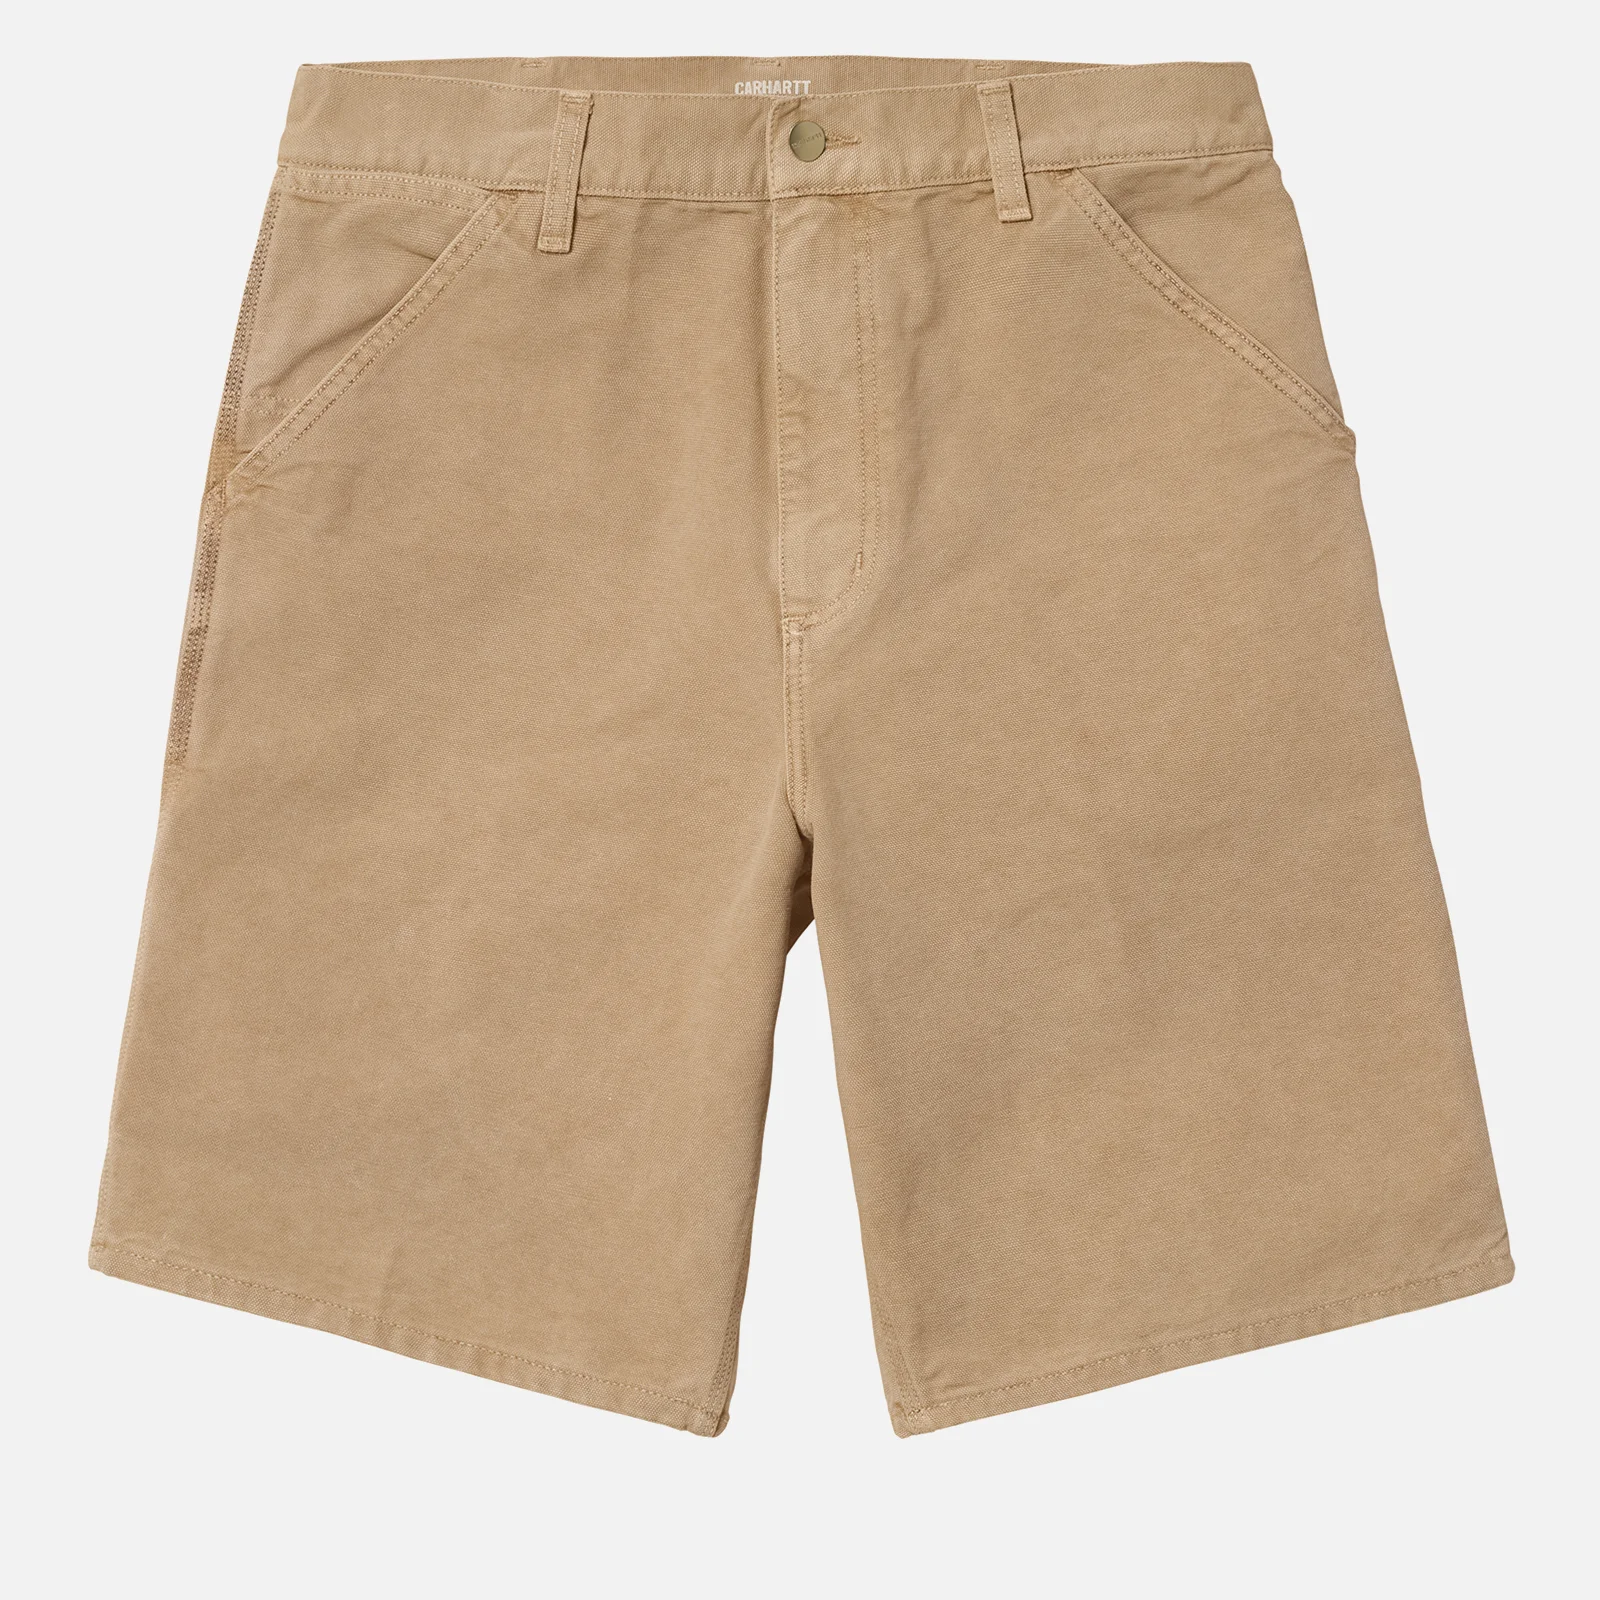 Carhartt WIP Men's Single Knee Shorts - Dusty H Brown Image 1